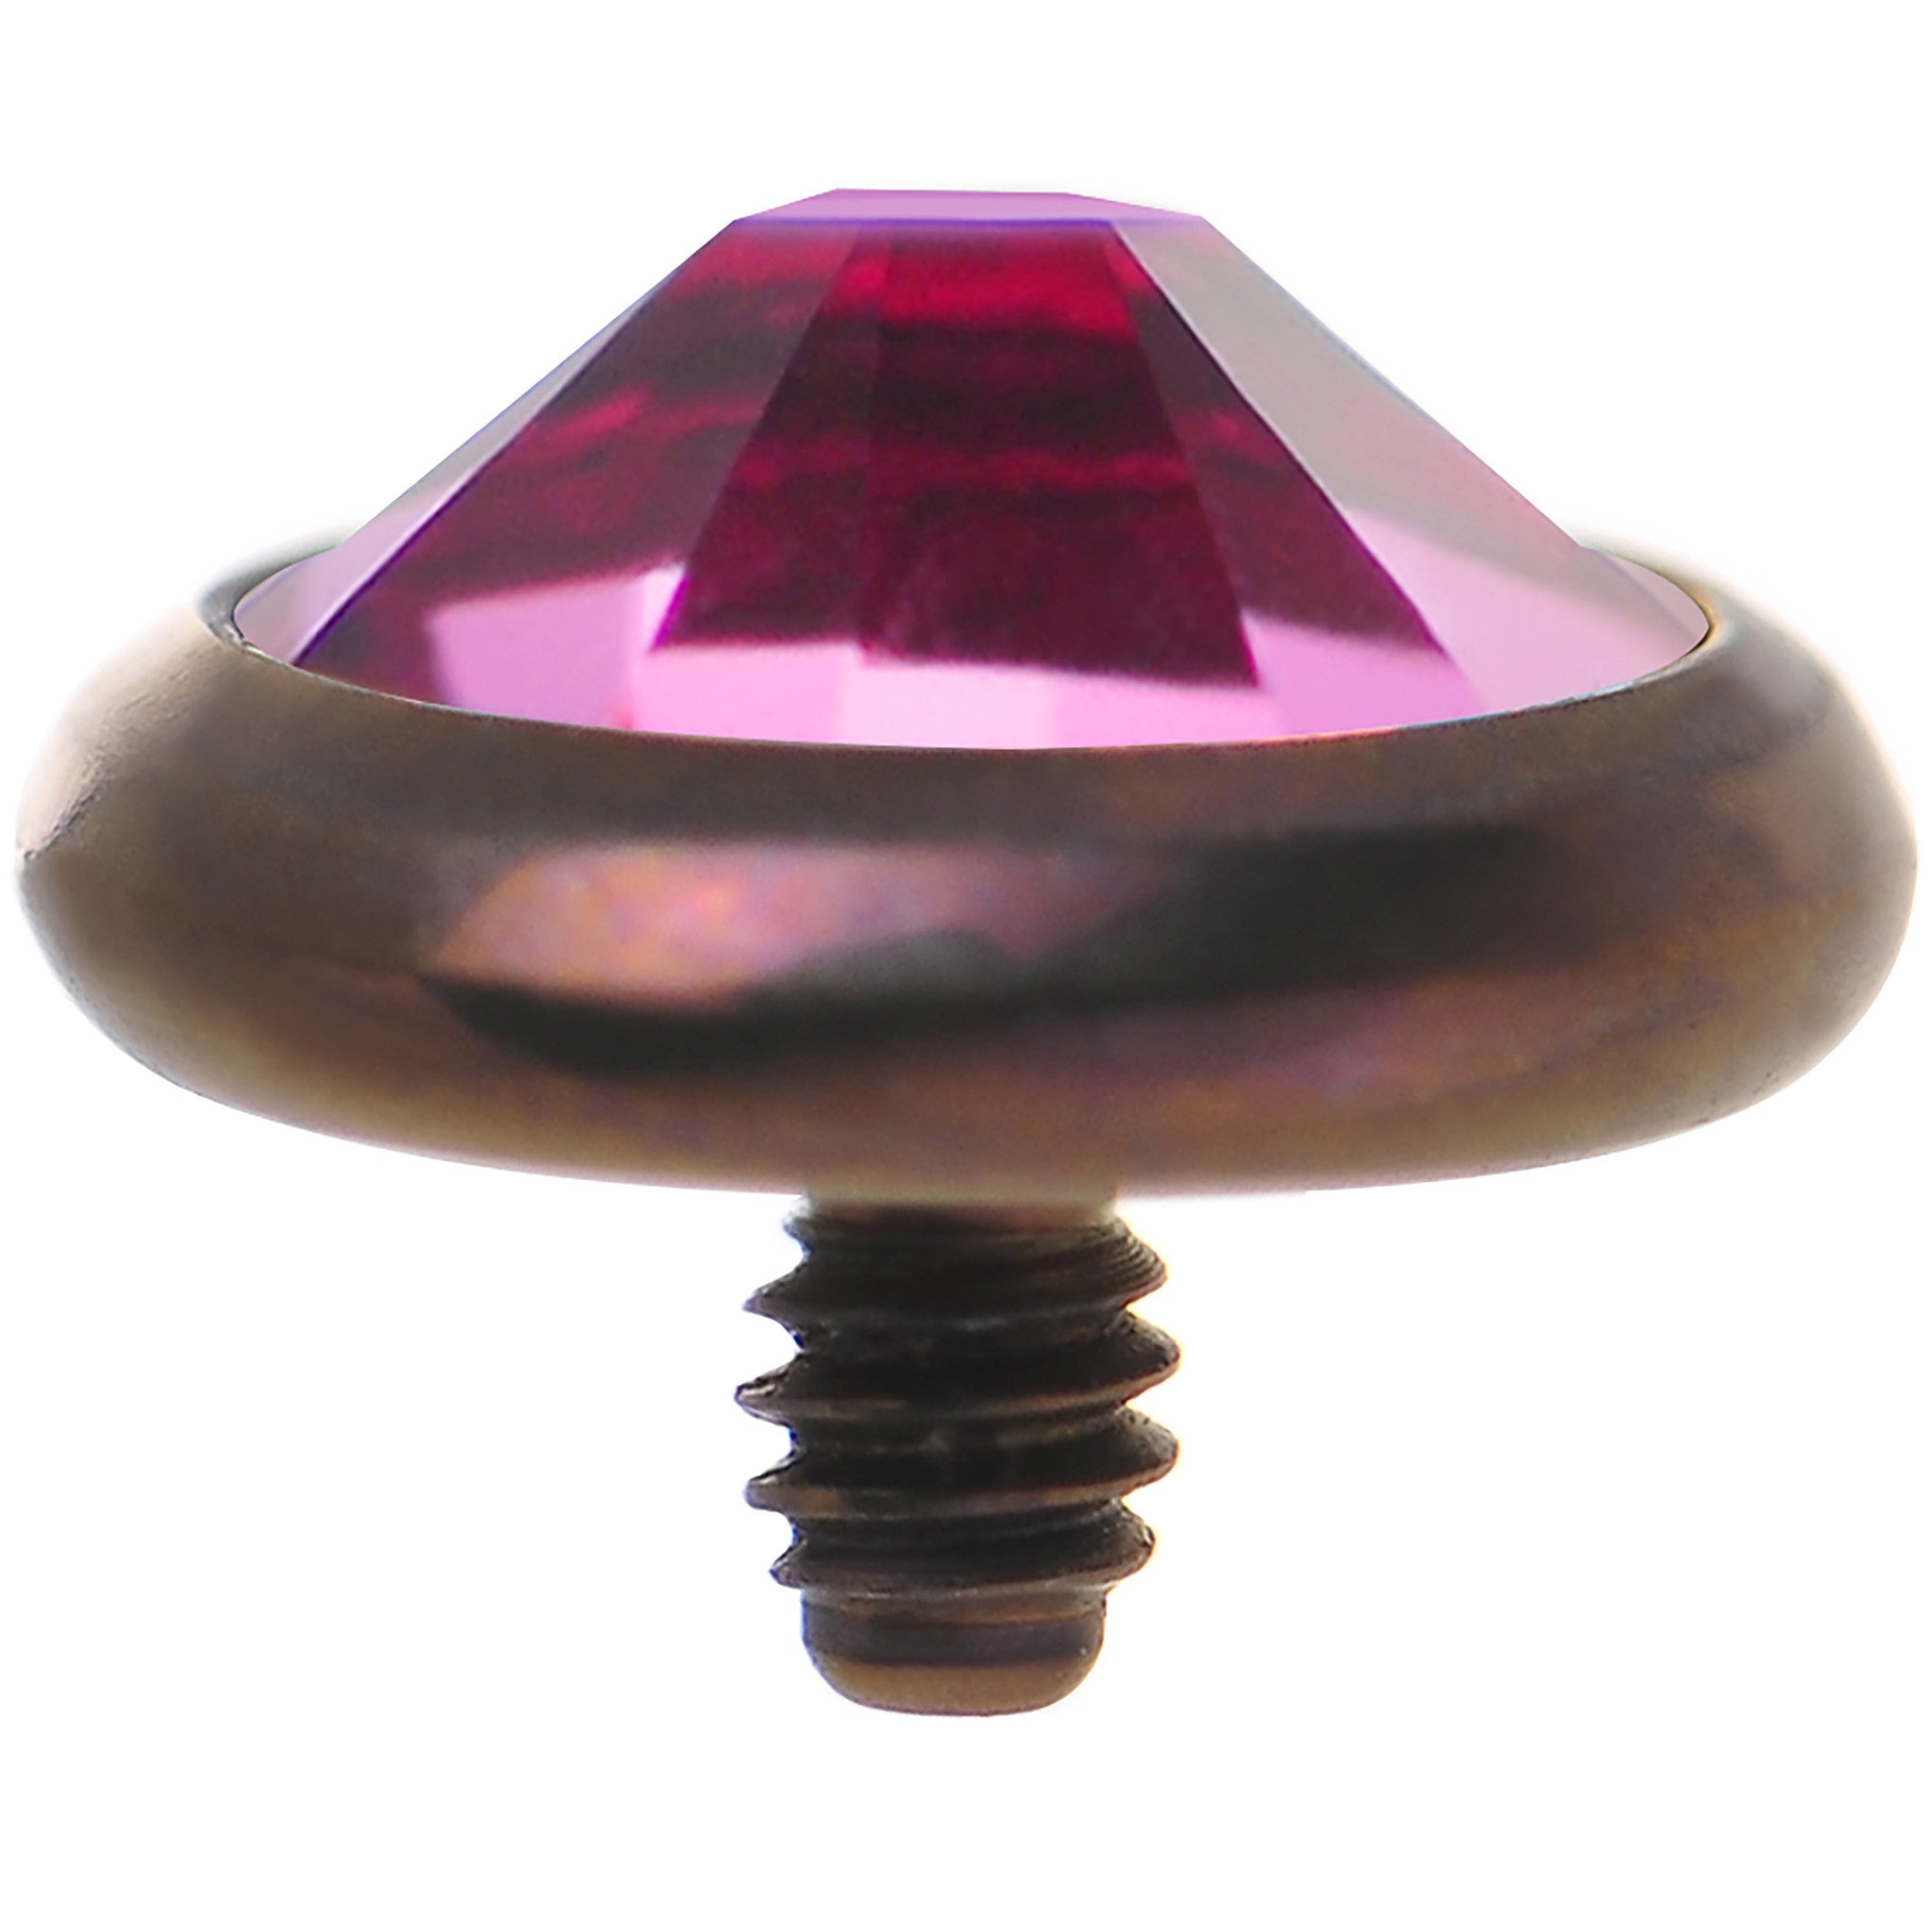 14 Gauge 5mm Pink Gem Bronze Anodized Titanium Dermal Top